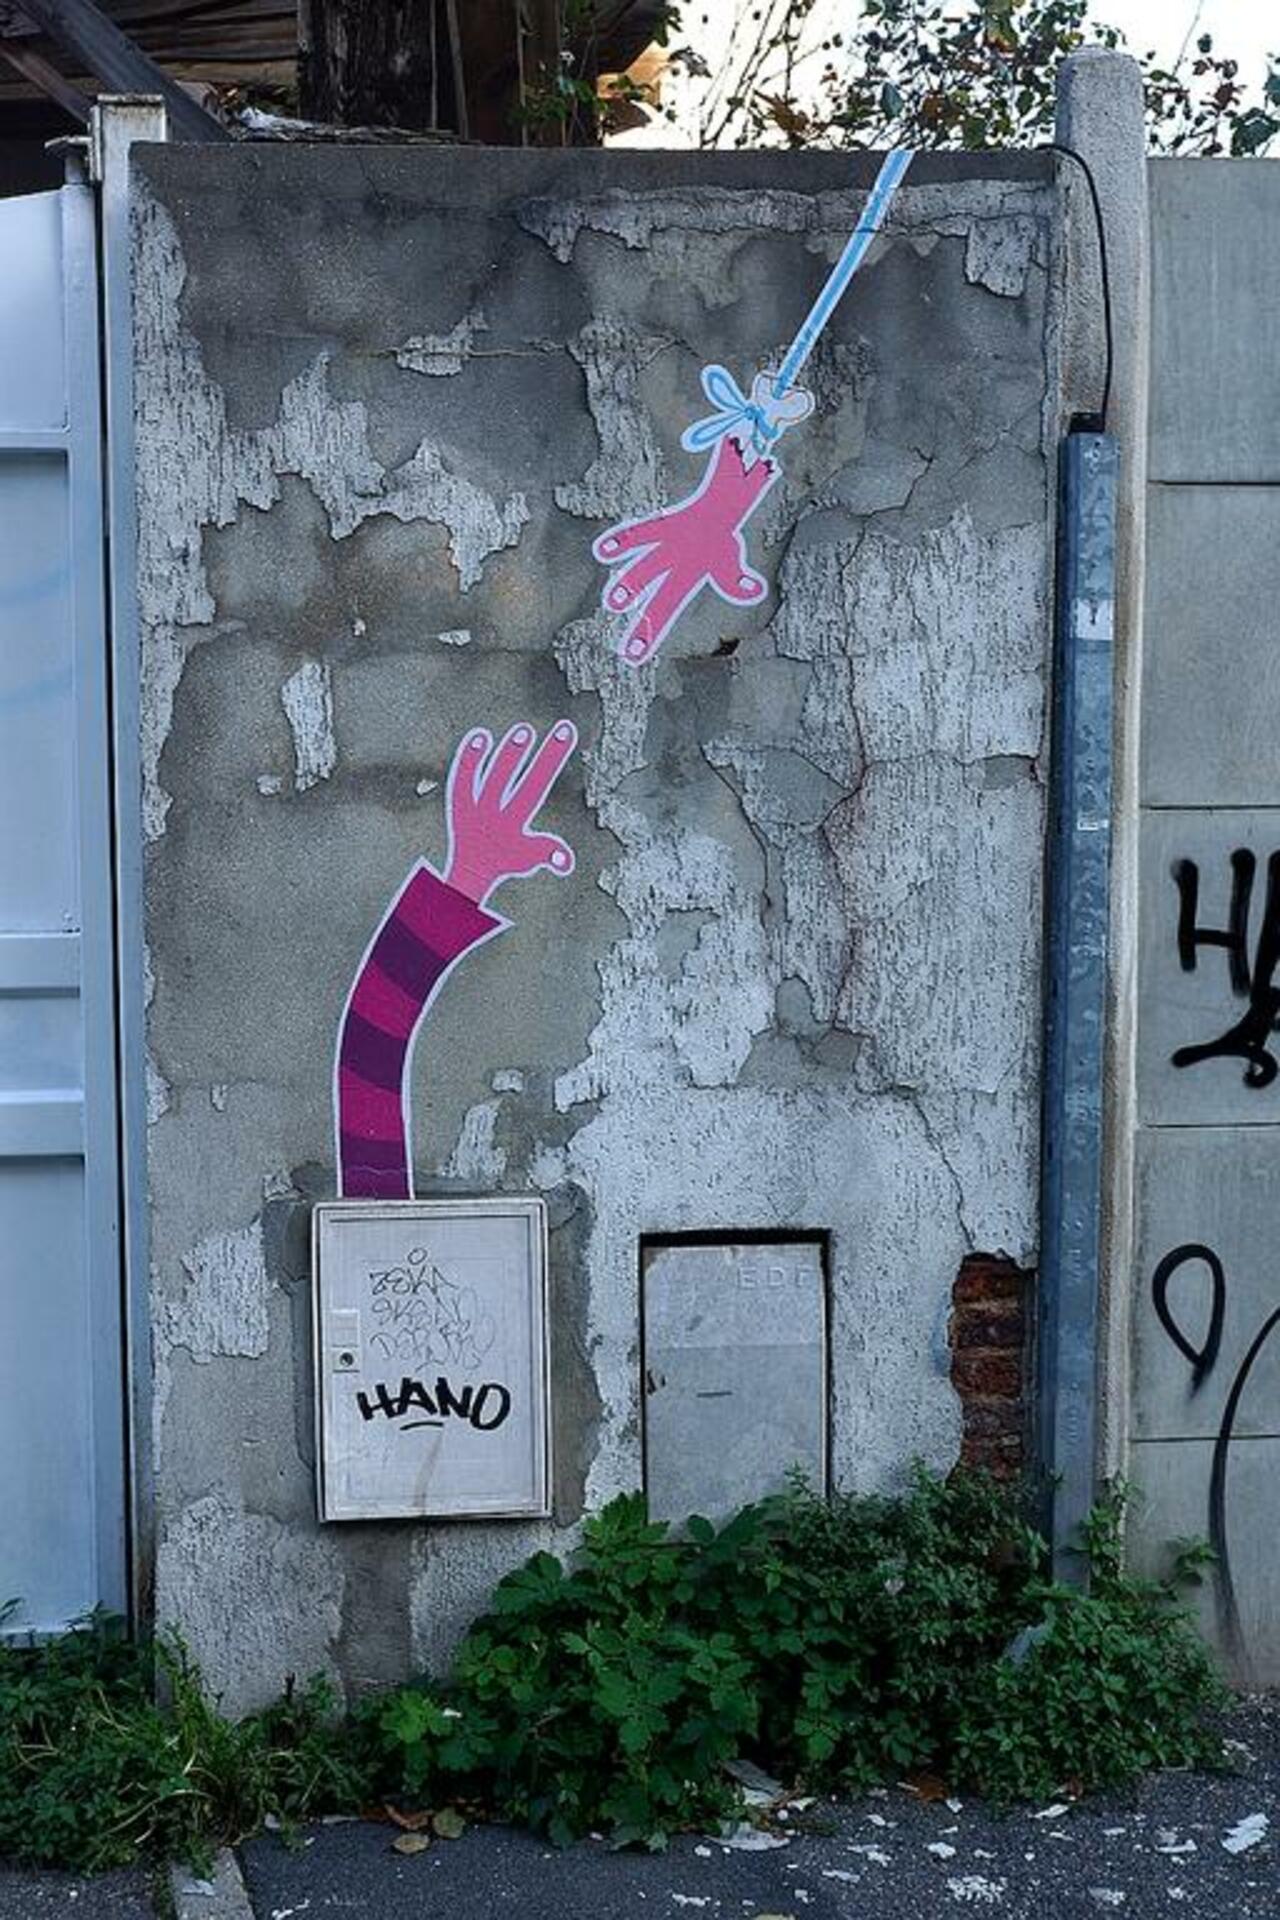 Street Art by anonymous in #Montreuil http://www.urbacolors.com #art #mural #graffiti #streetart http://t.co/z3yynXdAbb